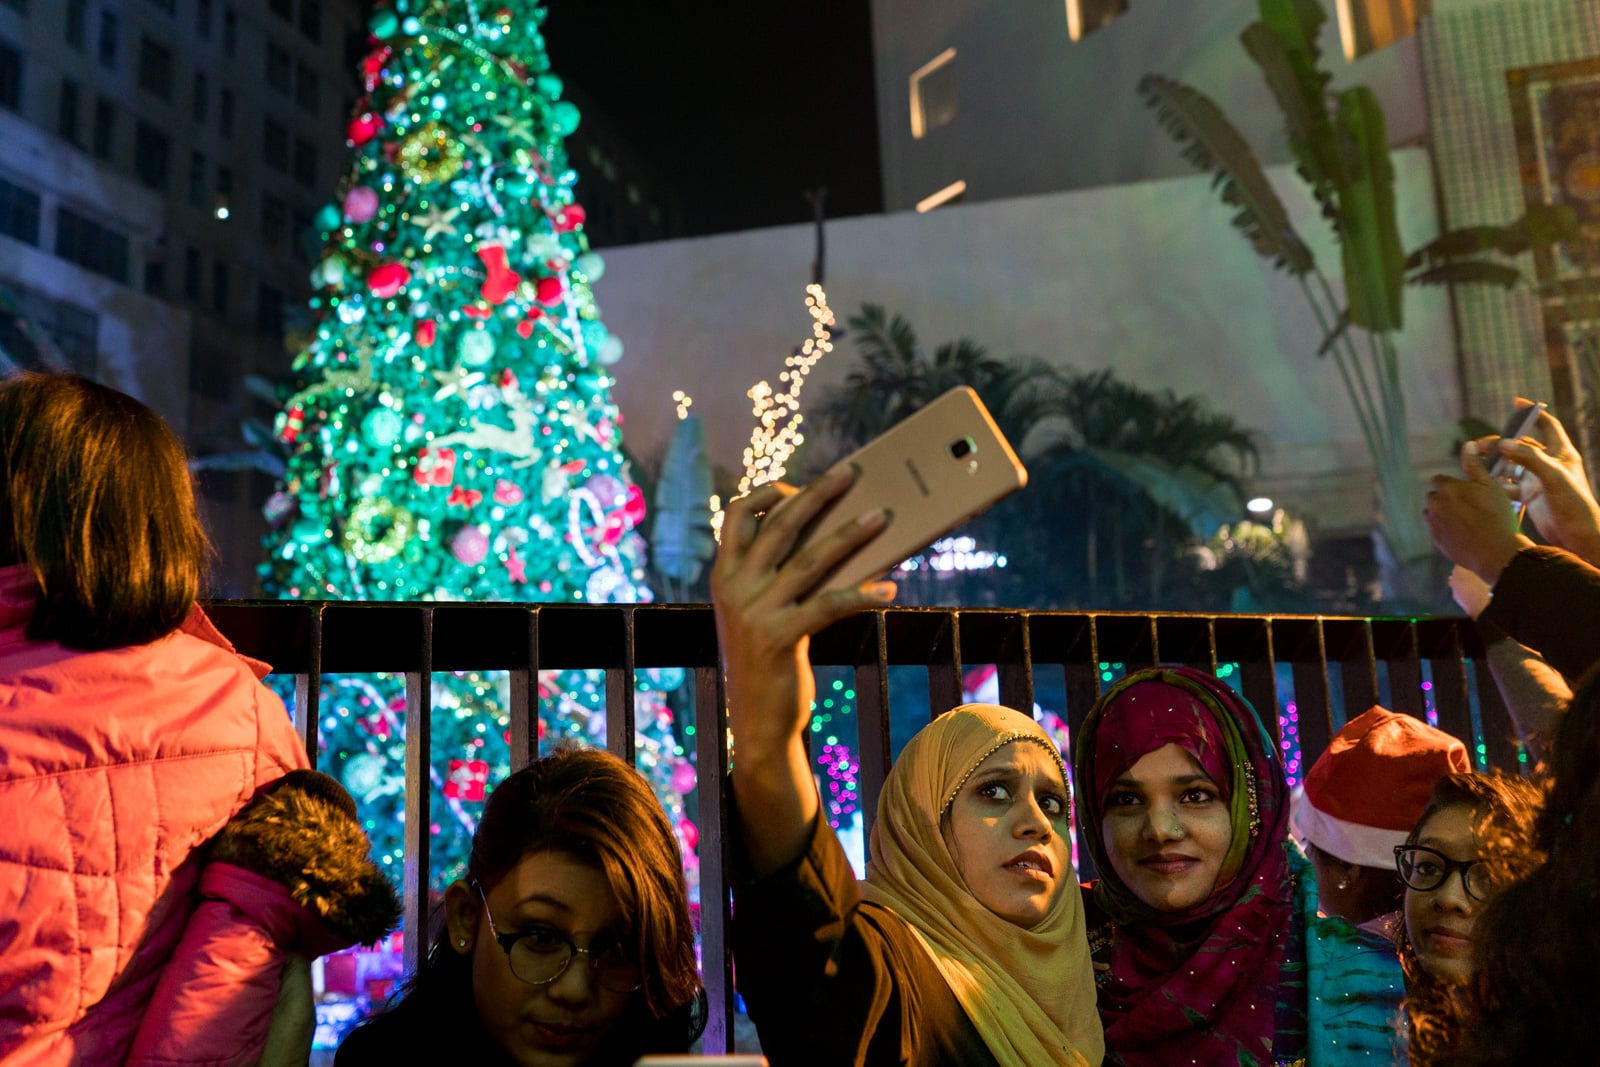 Muslim girls taking a Christmas selfie in Kolkata, India